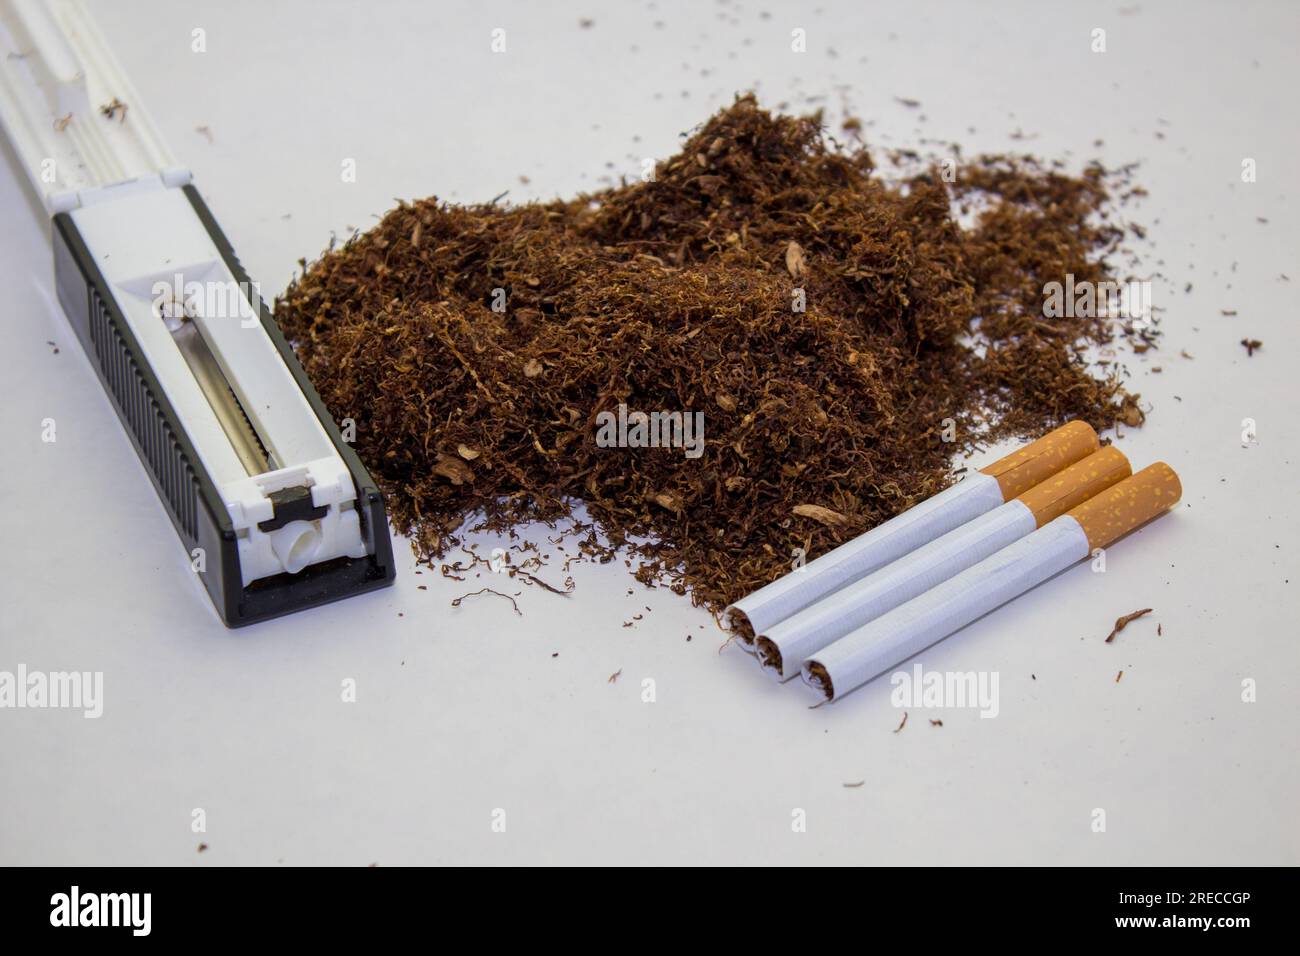 illicit cigarette production, crime production and sale of cigarettes Stock Photo